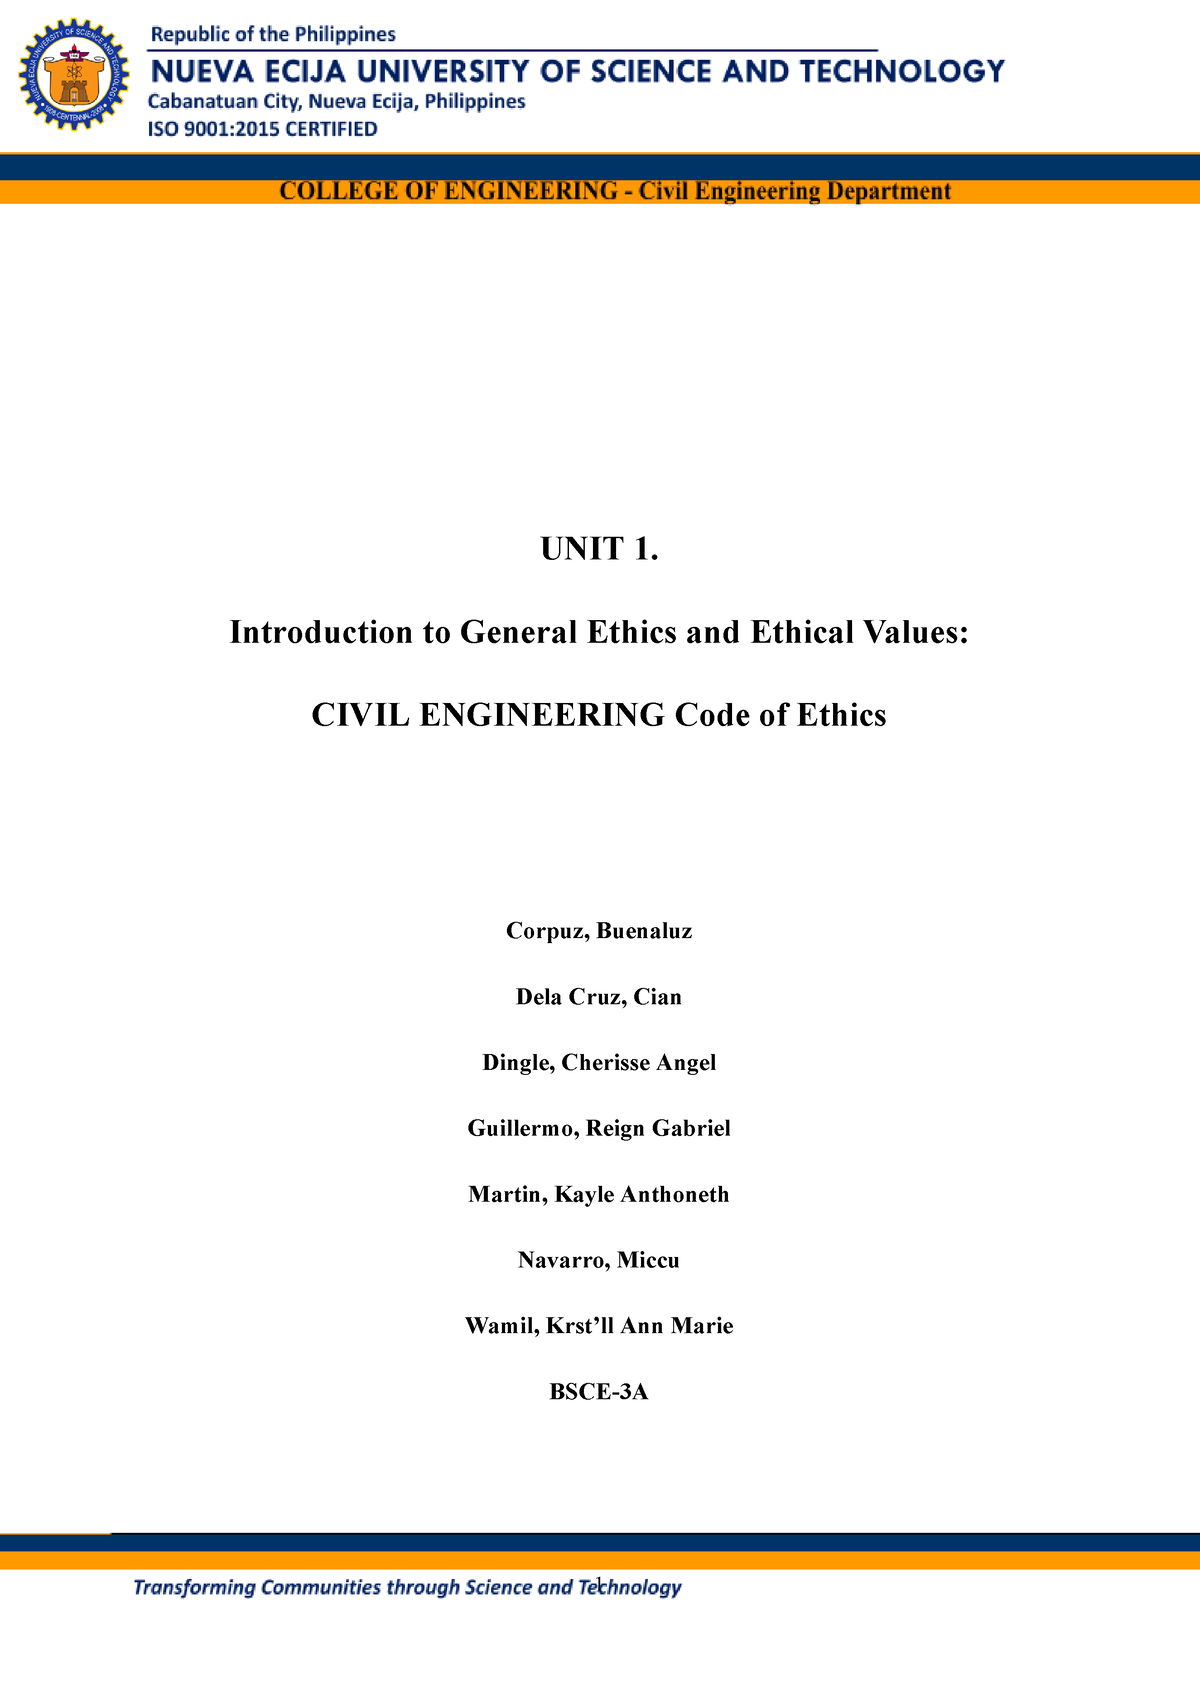 civil engineering ethics case studies pdf